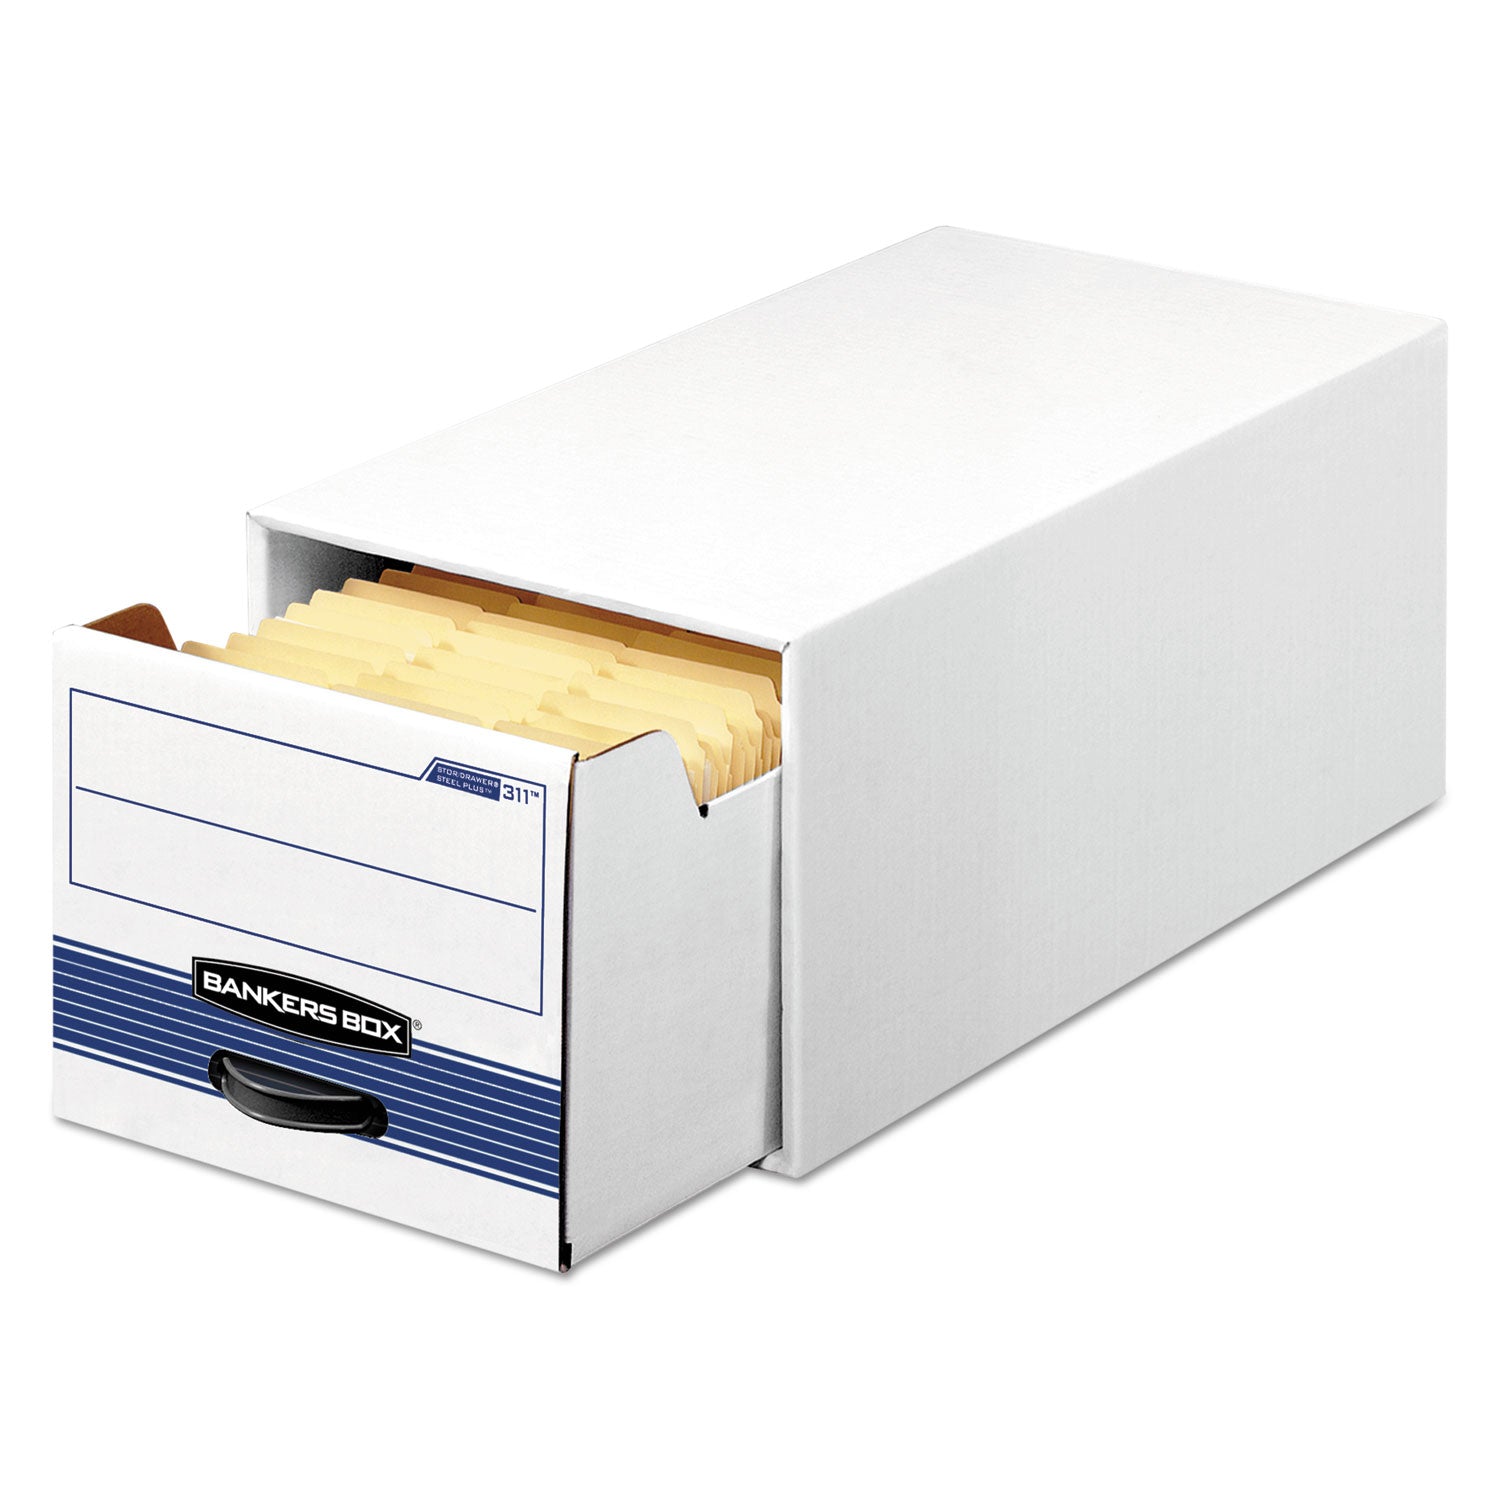 STOR/DRAWER STEEL PLUS Extra Space-Savings Storage Drawers, Letter Files, 10.5" x 25.25" x 6.5", White/Blue, 12/Carton - 